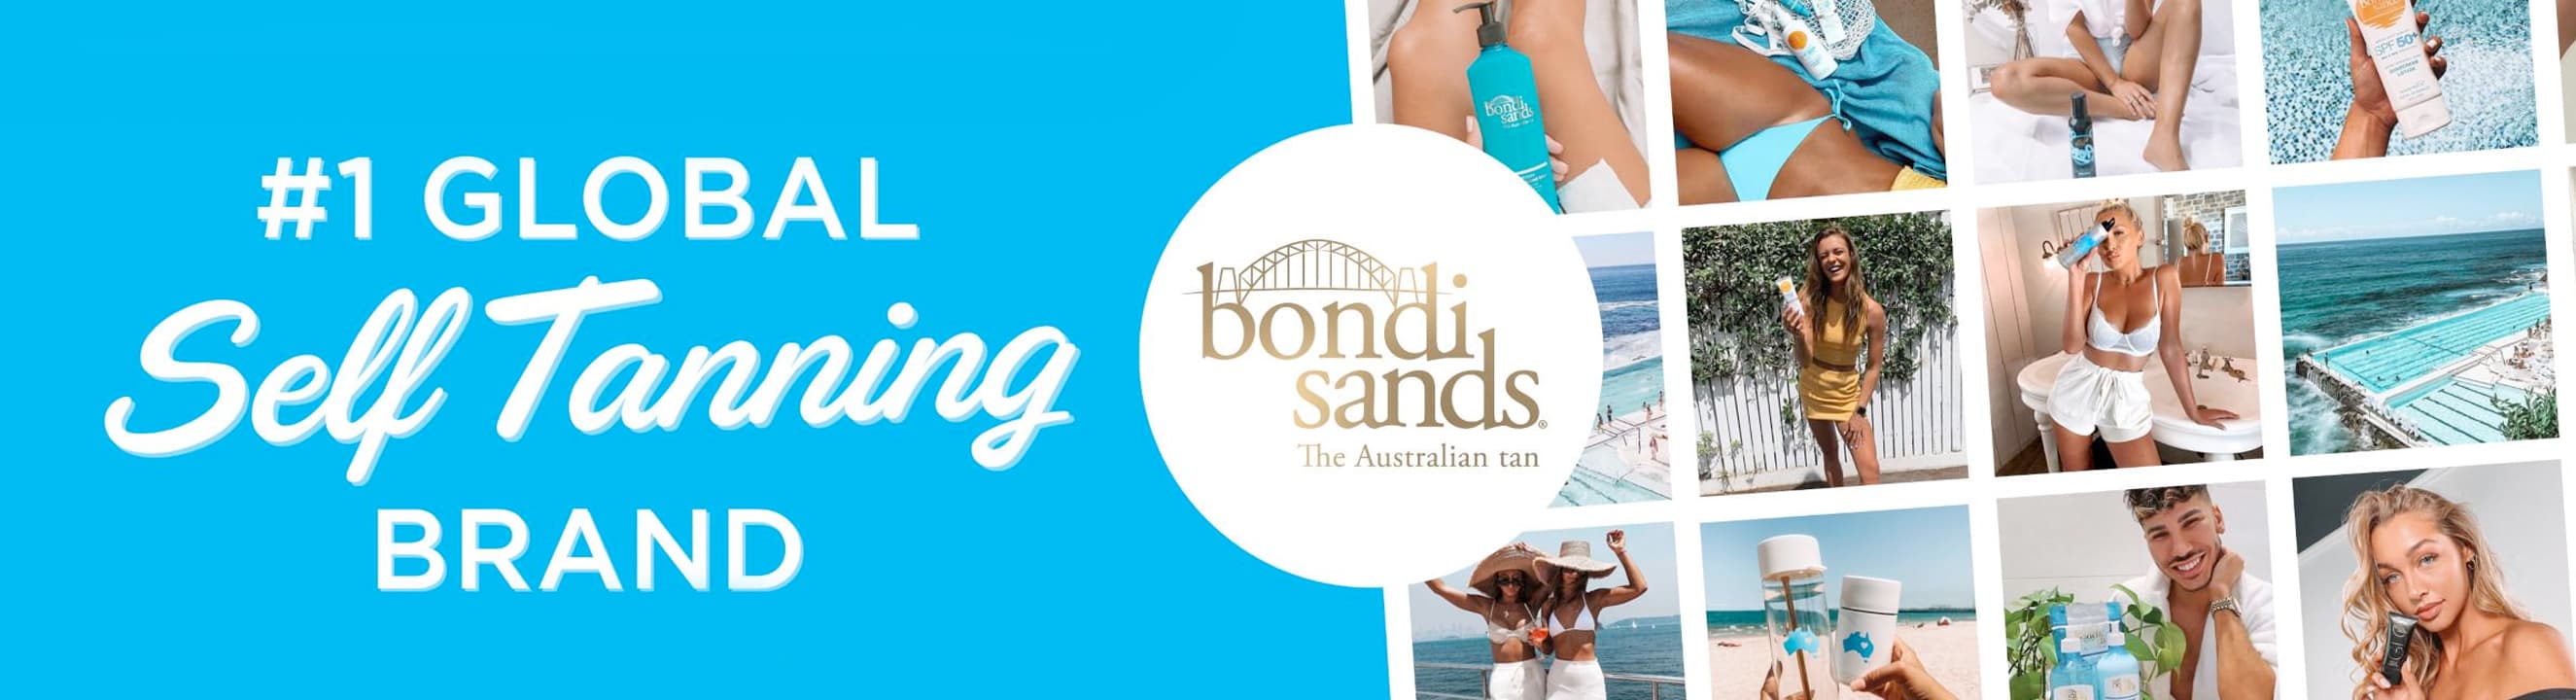 bondi-sands-collection